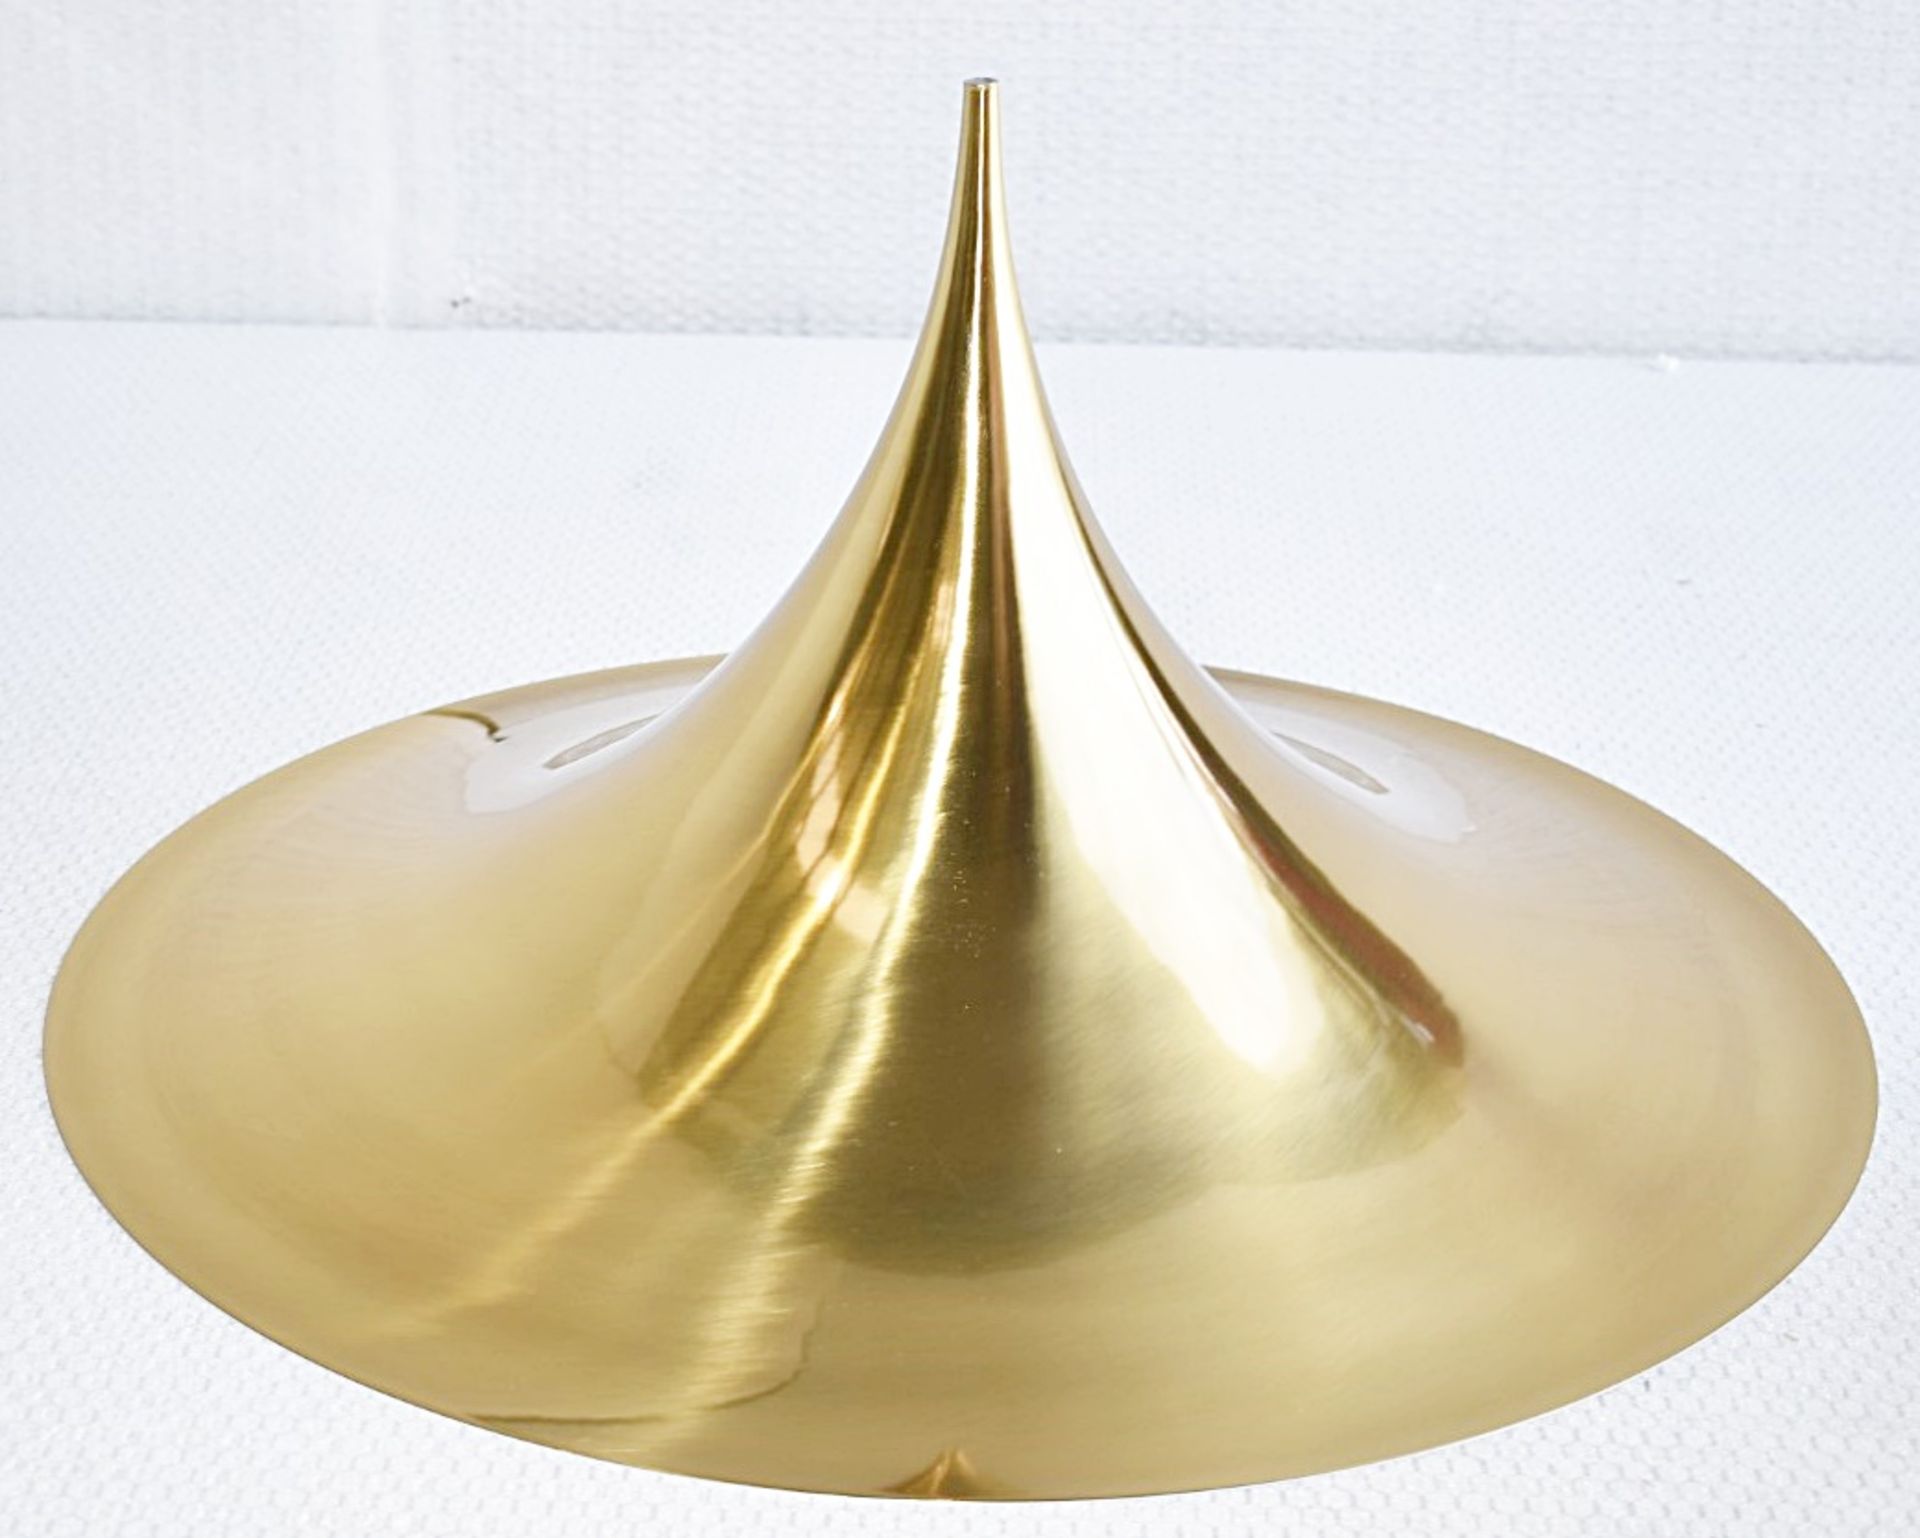 1 x GUBI 'Semi' Designer 60cm Metal Pendant Light Fitting in Polished Brass - Original Price £540.00 - Image 12 of 12